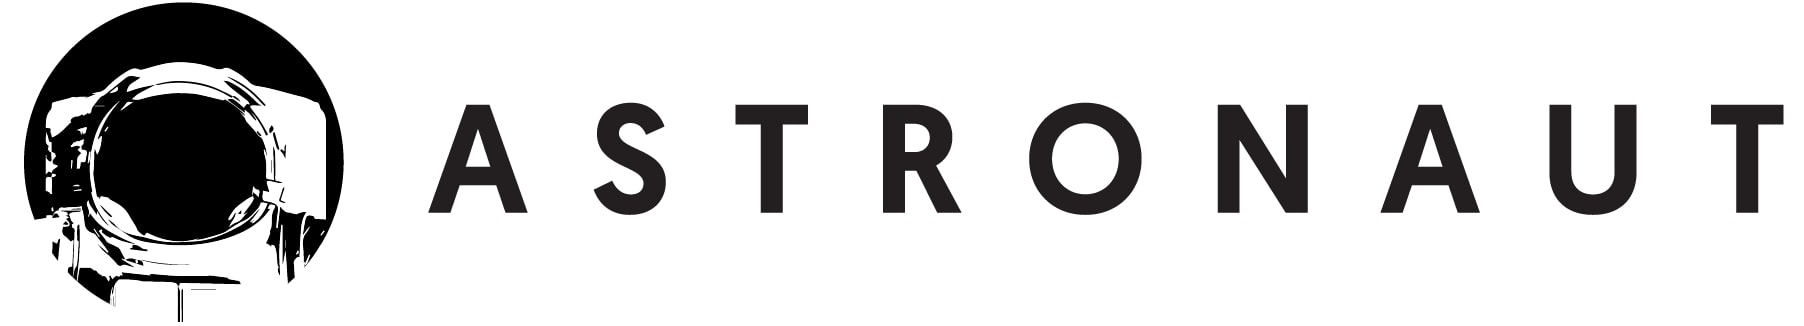 Astronauth logo